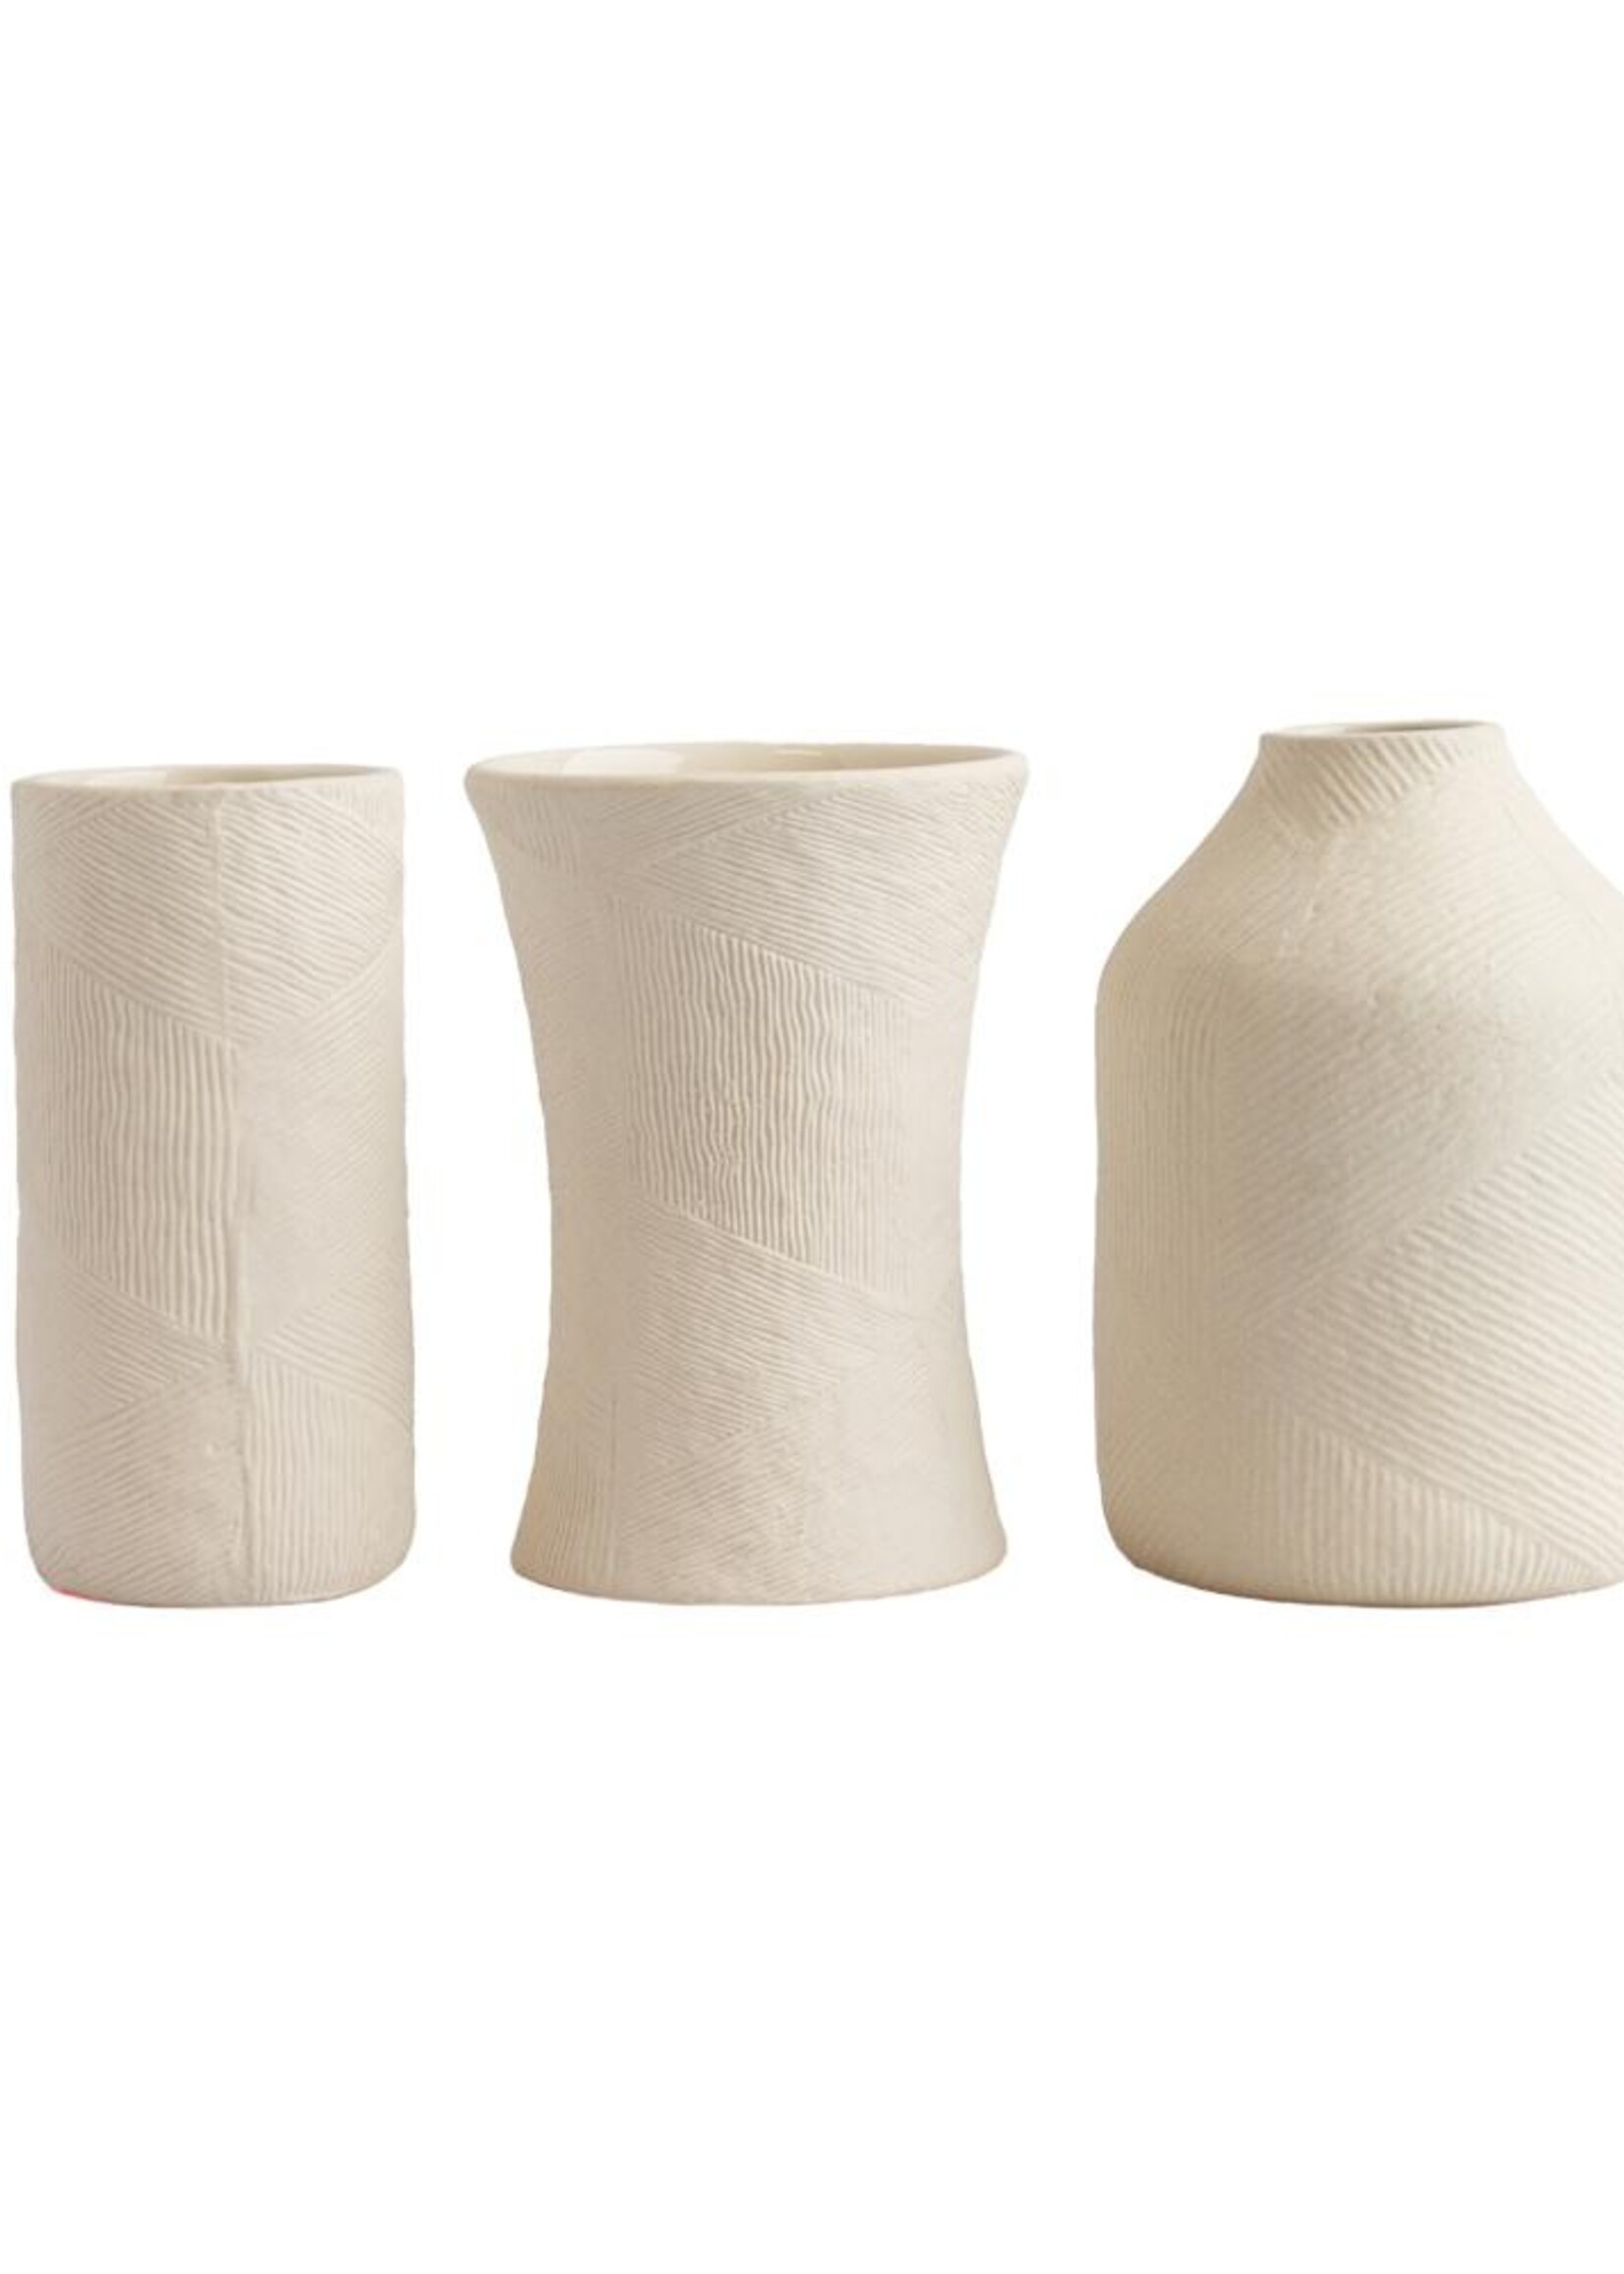 Leeff Mini vases Mats  - set van 3 - Leeff